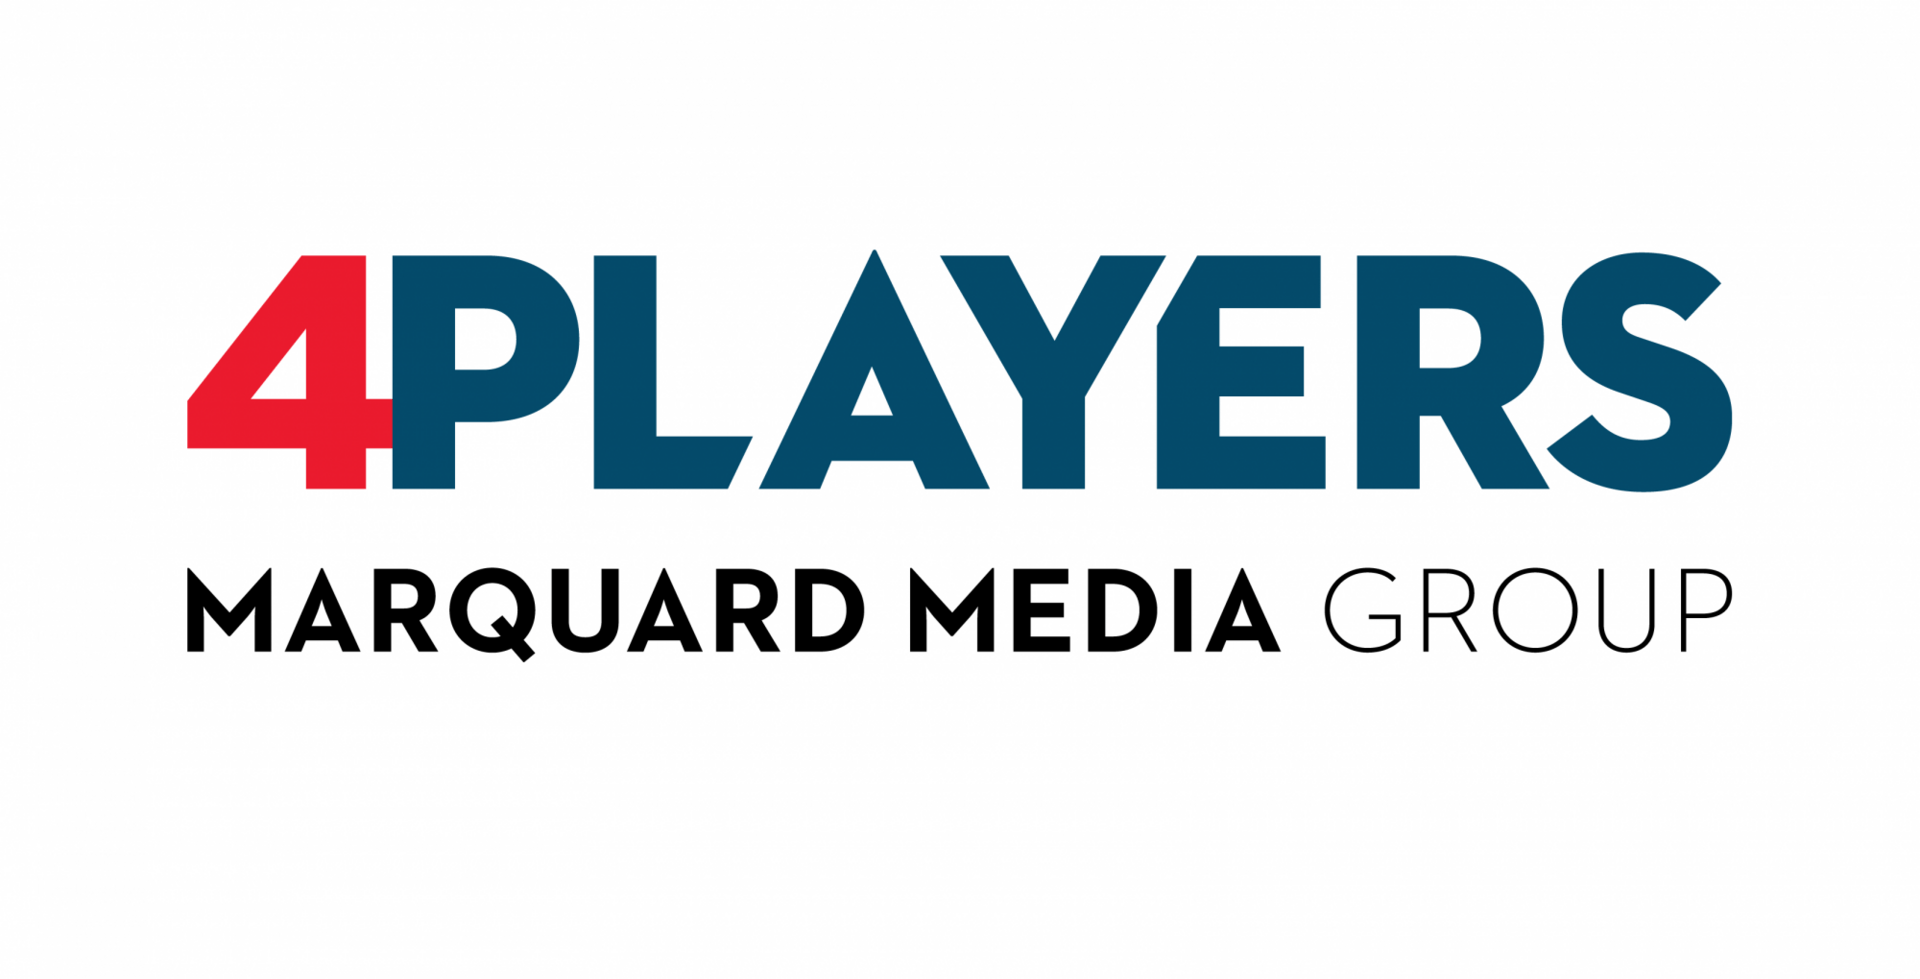 4Players gehört zur Marquard Media Group